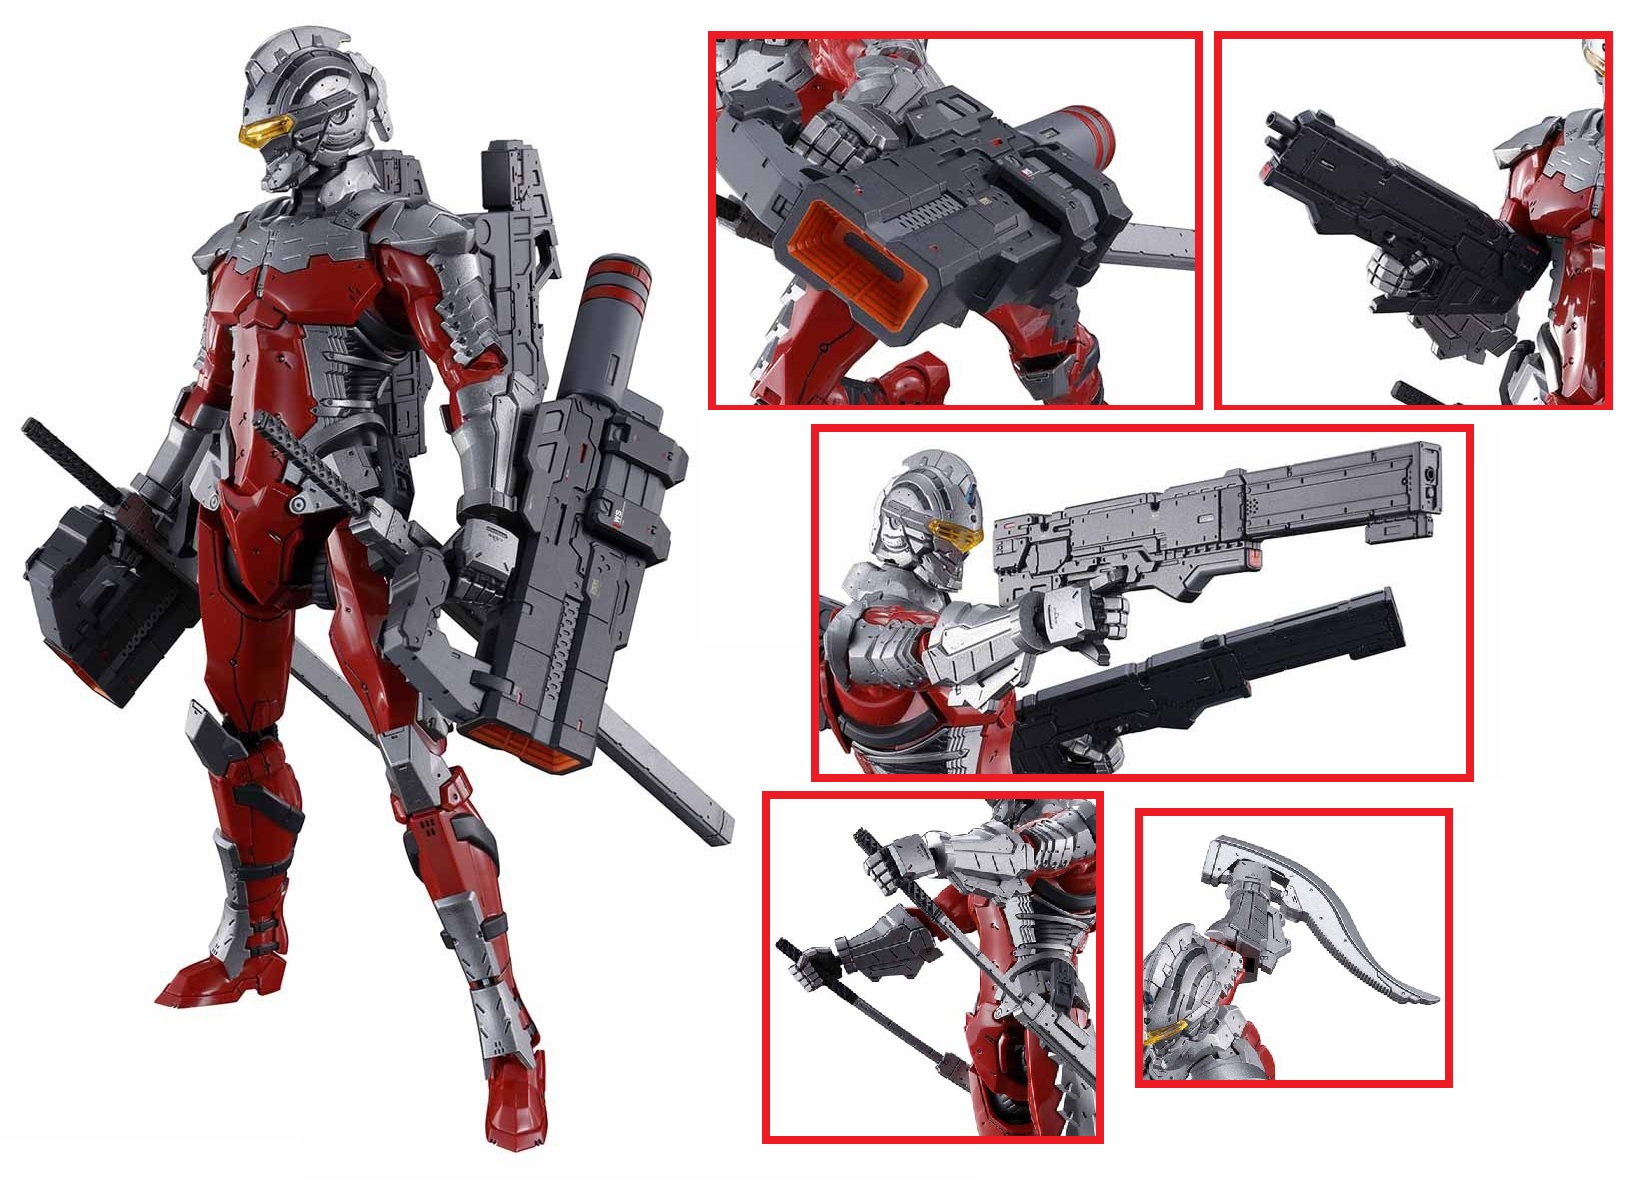 Ultraman (Jack Suit Ver.) 1/12 Scale Action Figure